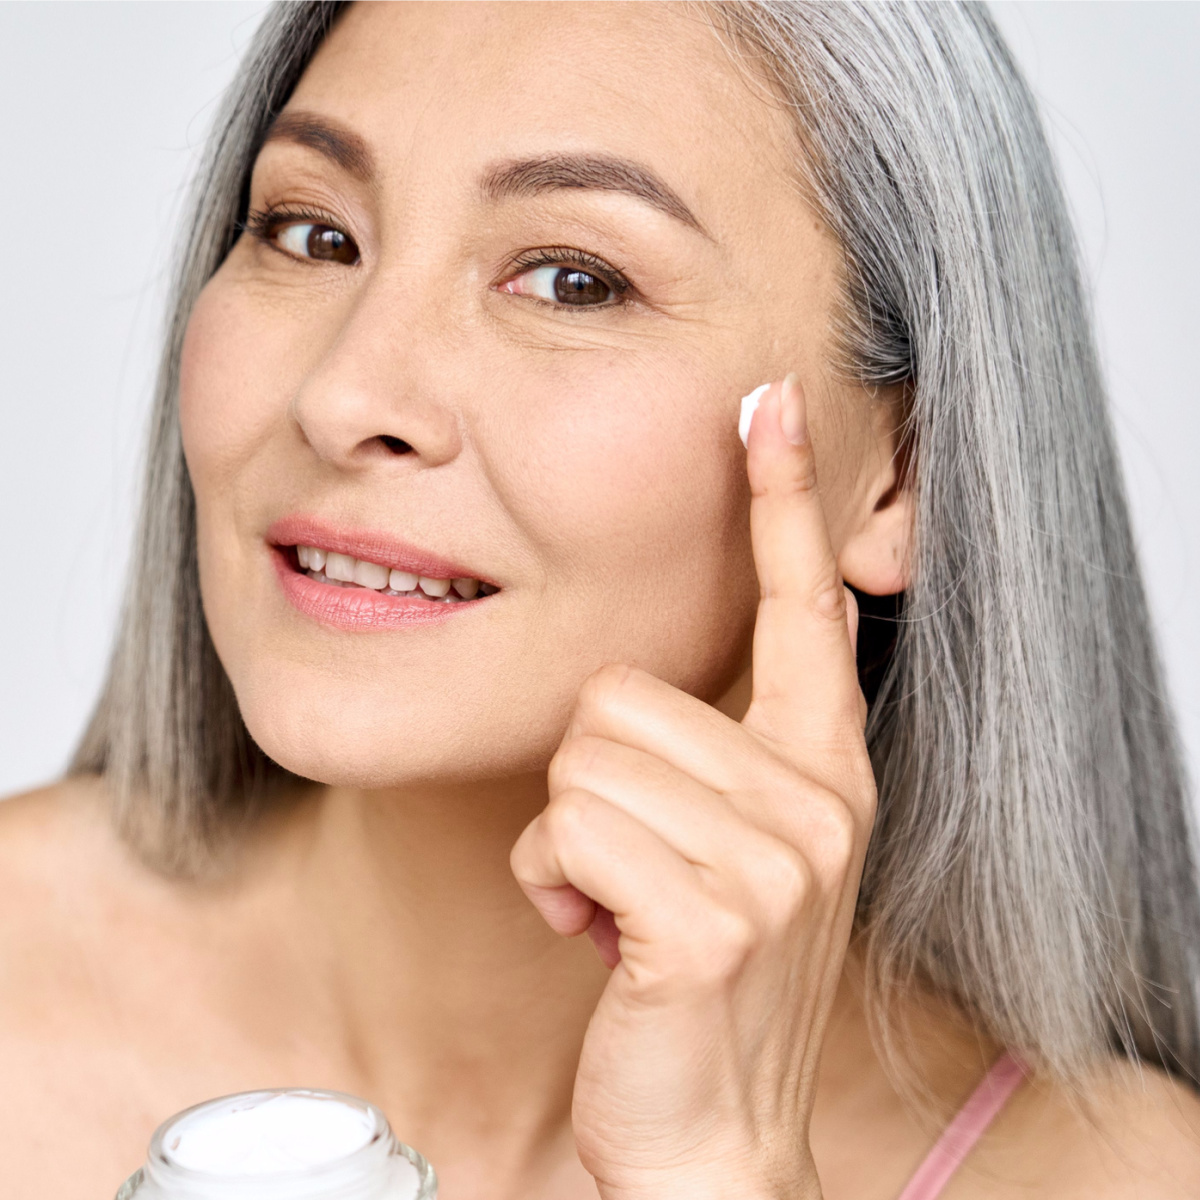 mature senior gray hair woman applying white sunscreen